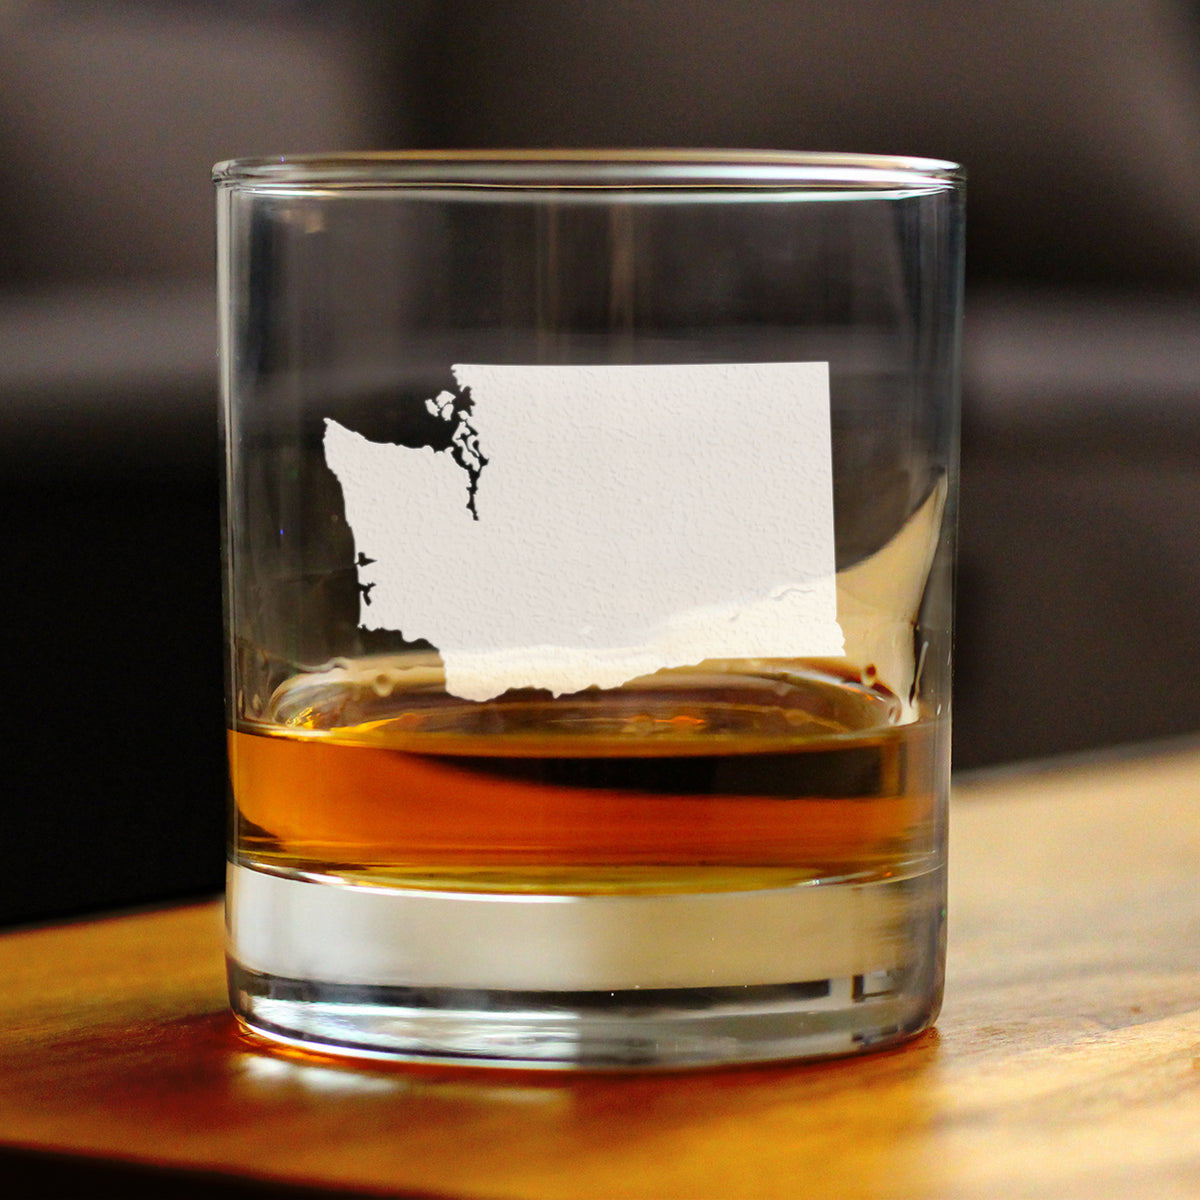 Washington State Outline Whiskey Rocks Glass - State Themed Drinking Decor and Gifts for Washingtonian Women &amp; Men - 10.25 Oz Whisky Tumbler Glasses